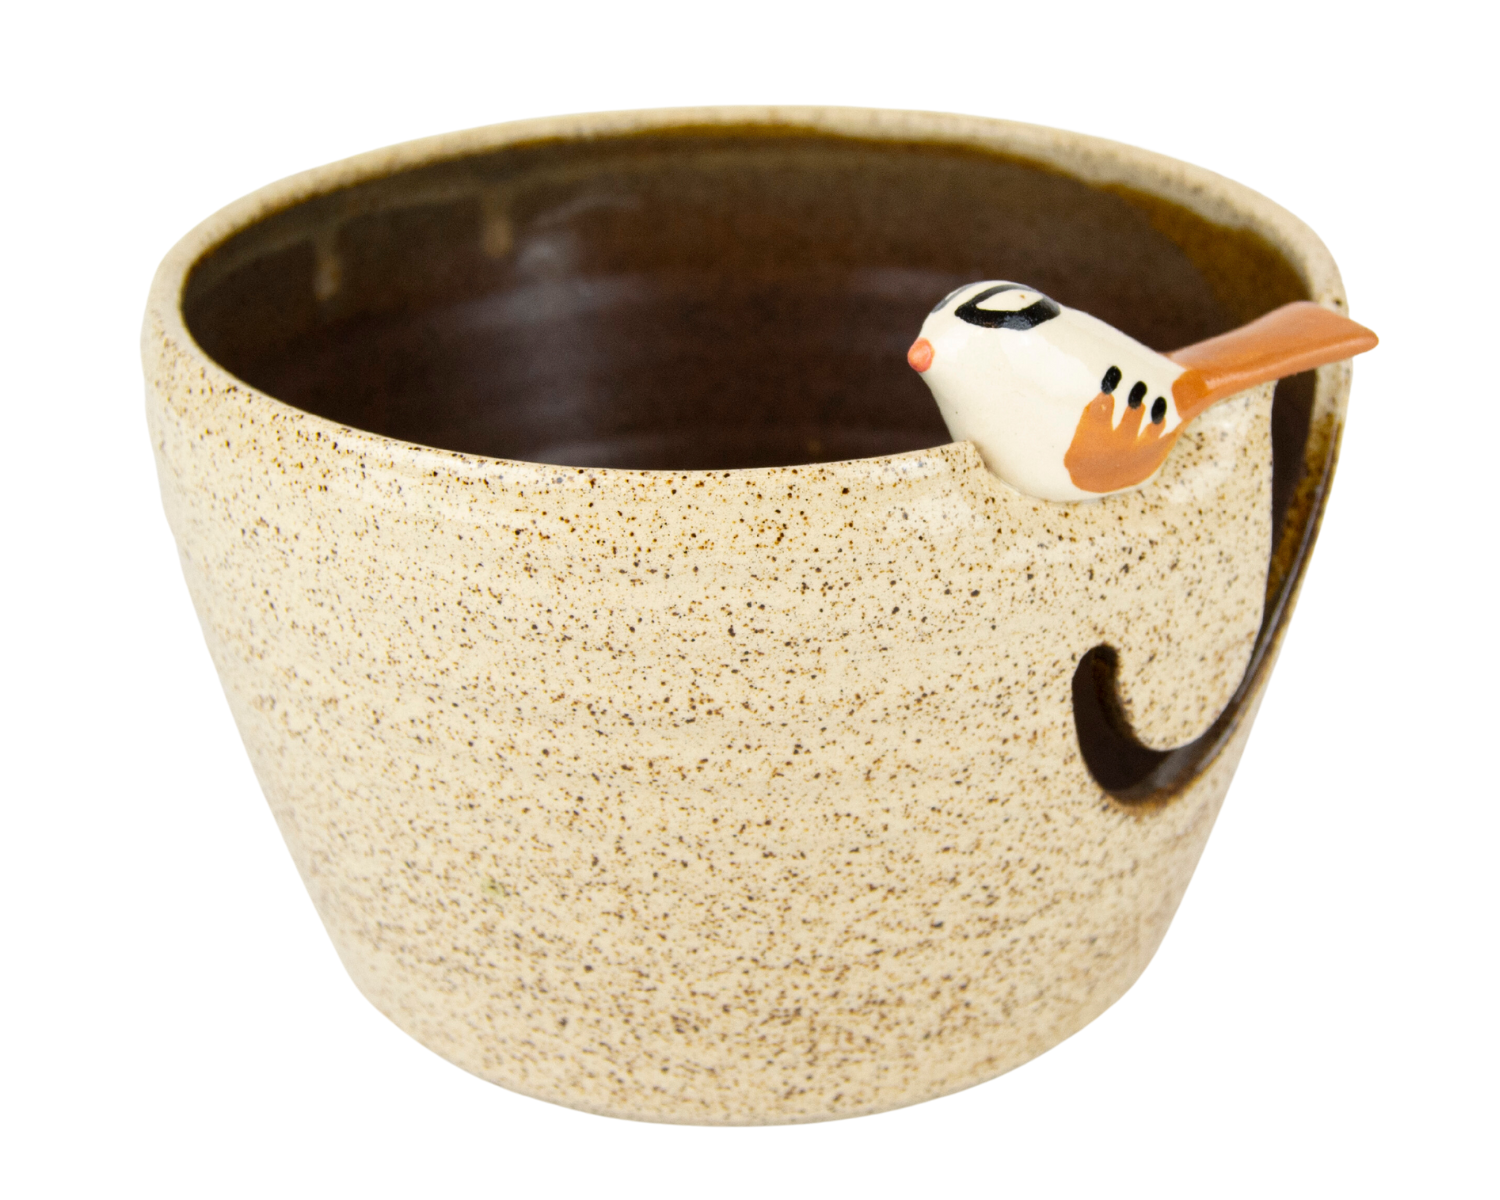 Kitty yarn bowl! : r/Pottery